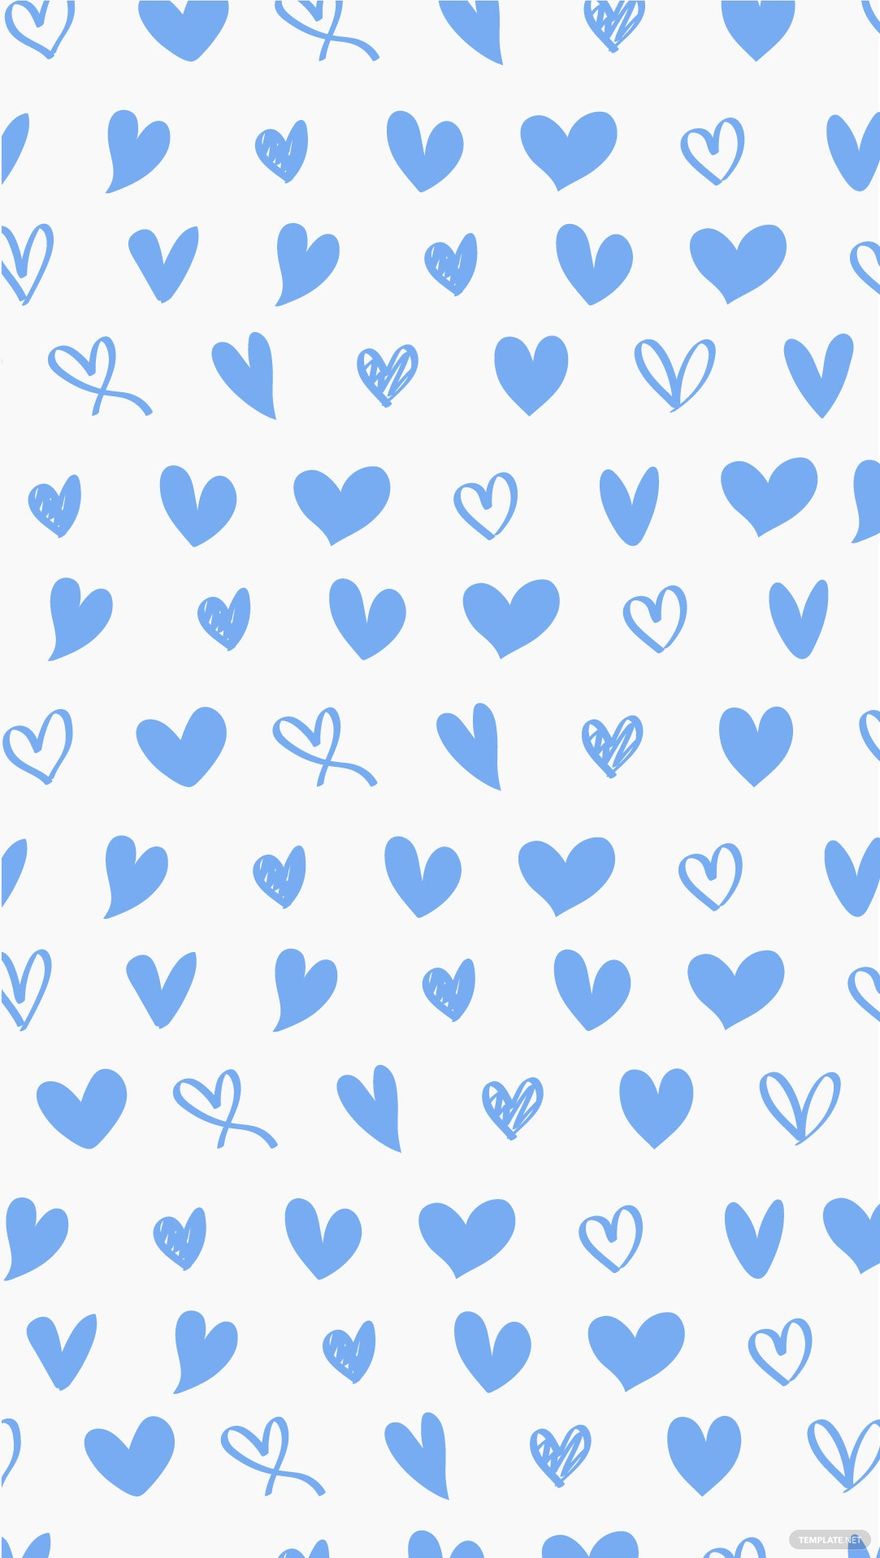 Free Iphone Blue Heart Background - EPS, Illustrator, JPG, SVG ...